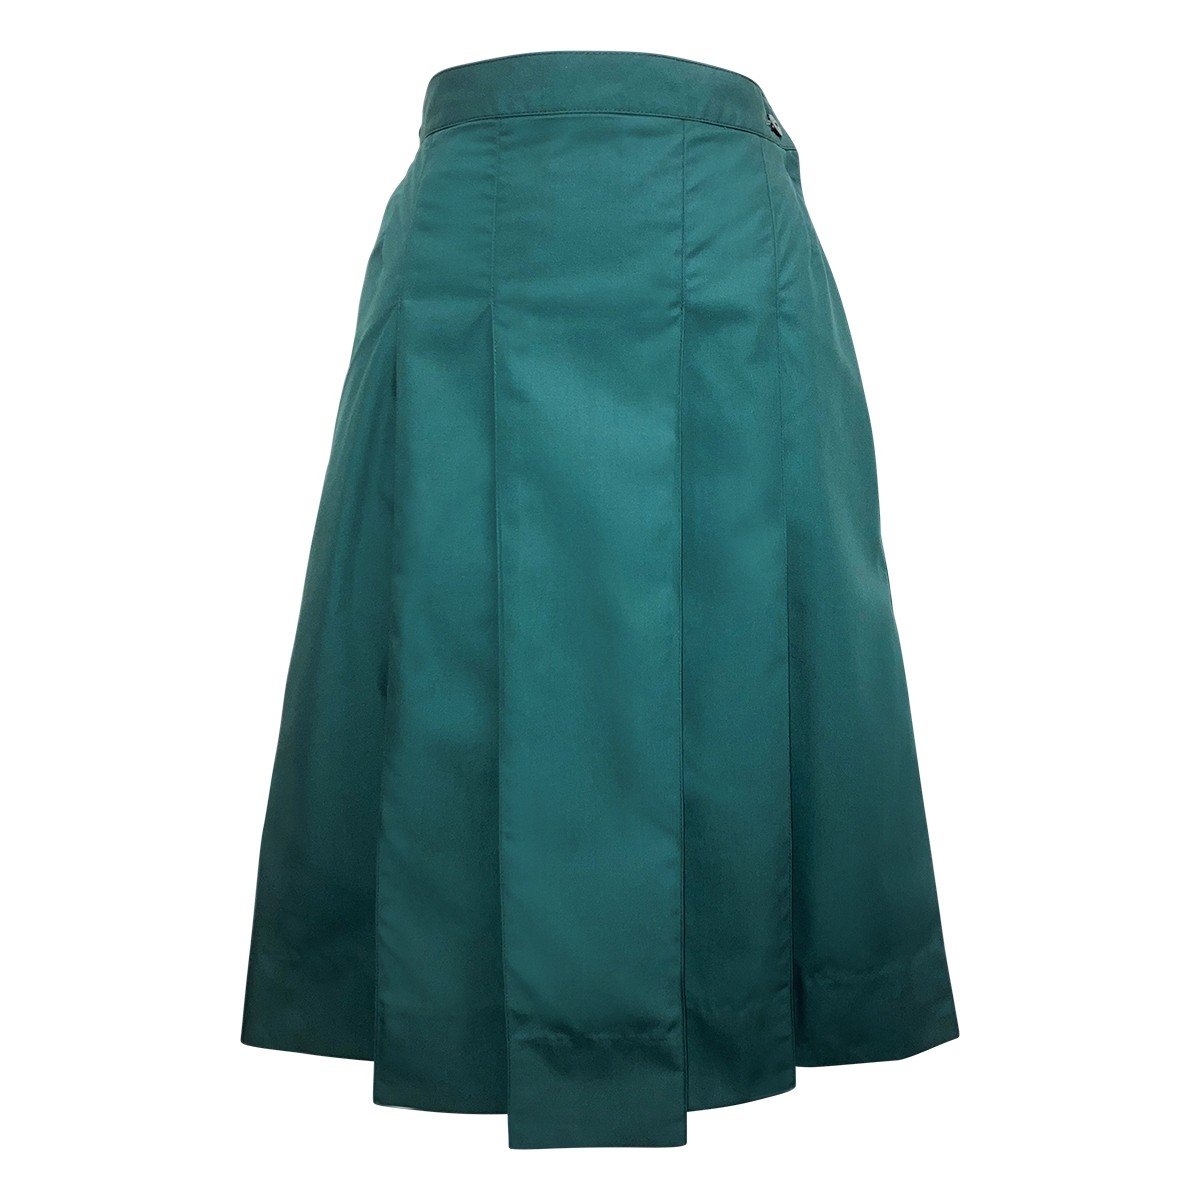 Corinda State High School Skirt - Uniform - Corinda State High School ...